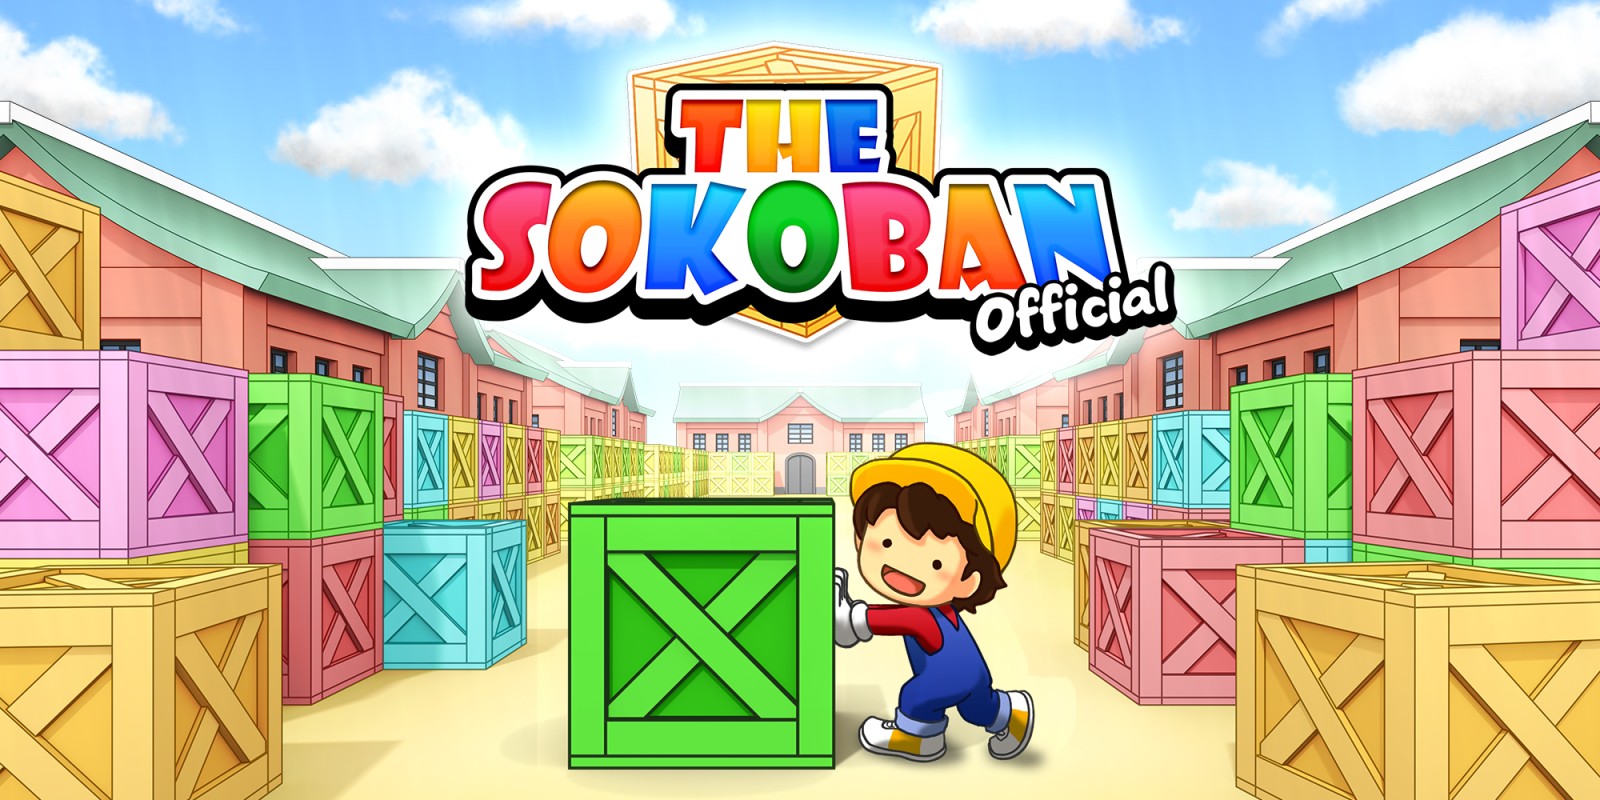 The Sokoban